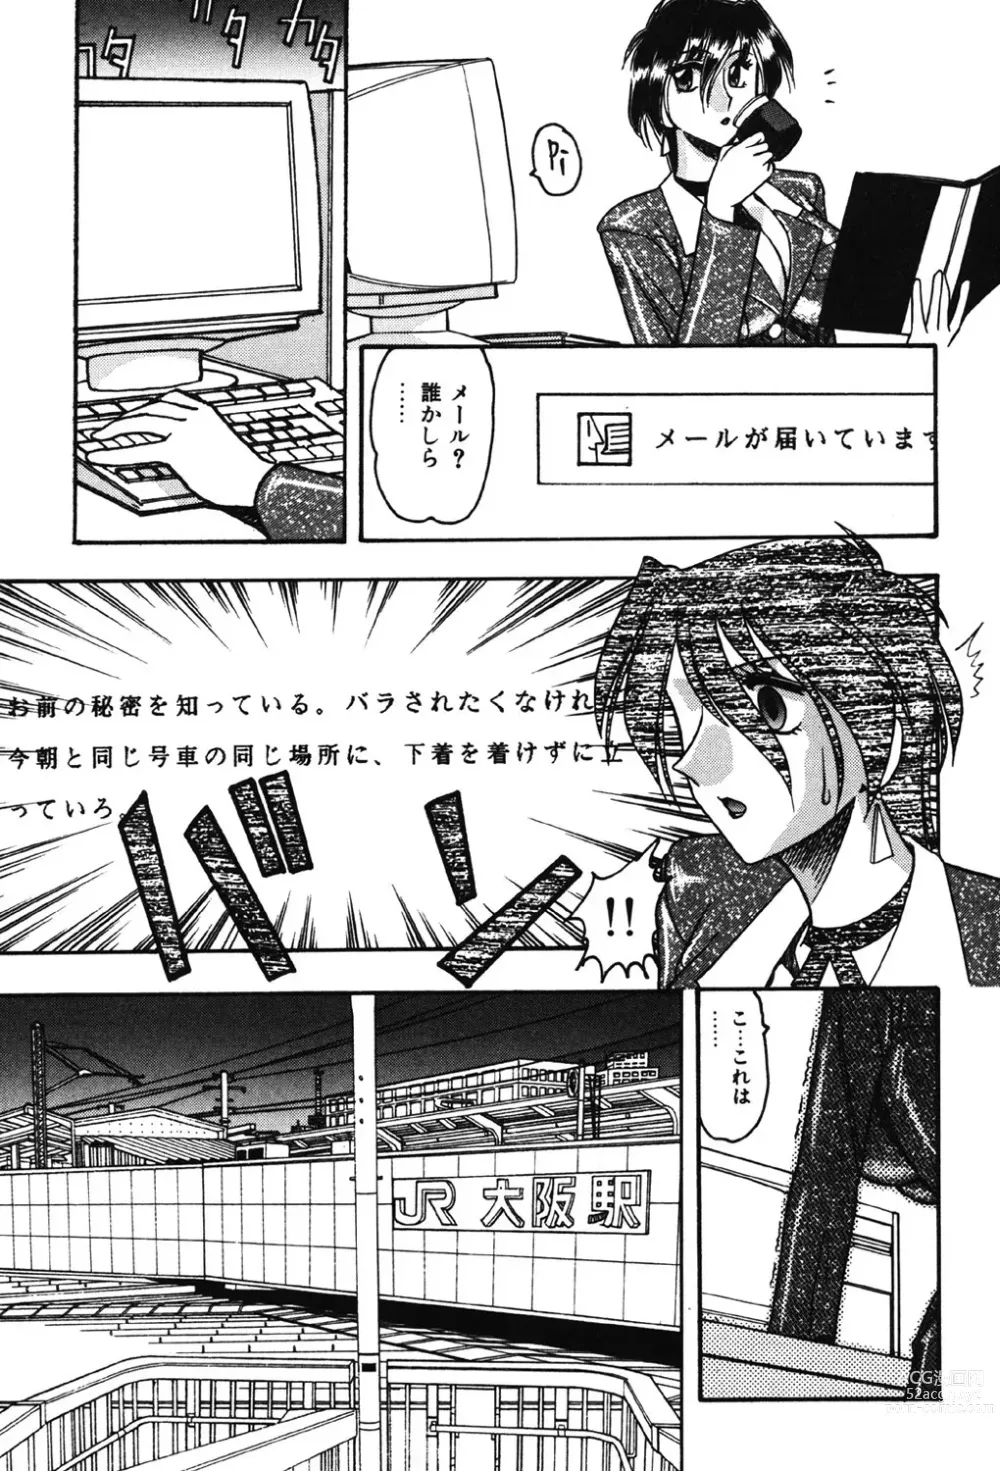 Page 10 of manga Hahaoya Ga Onna Ni Naru Toki